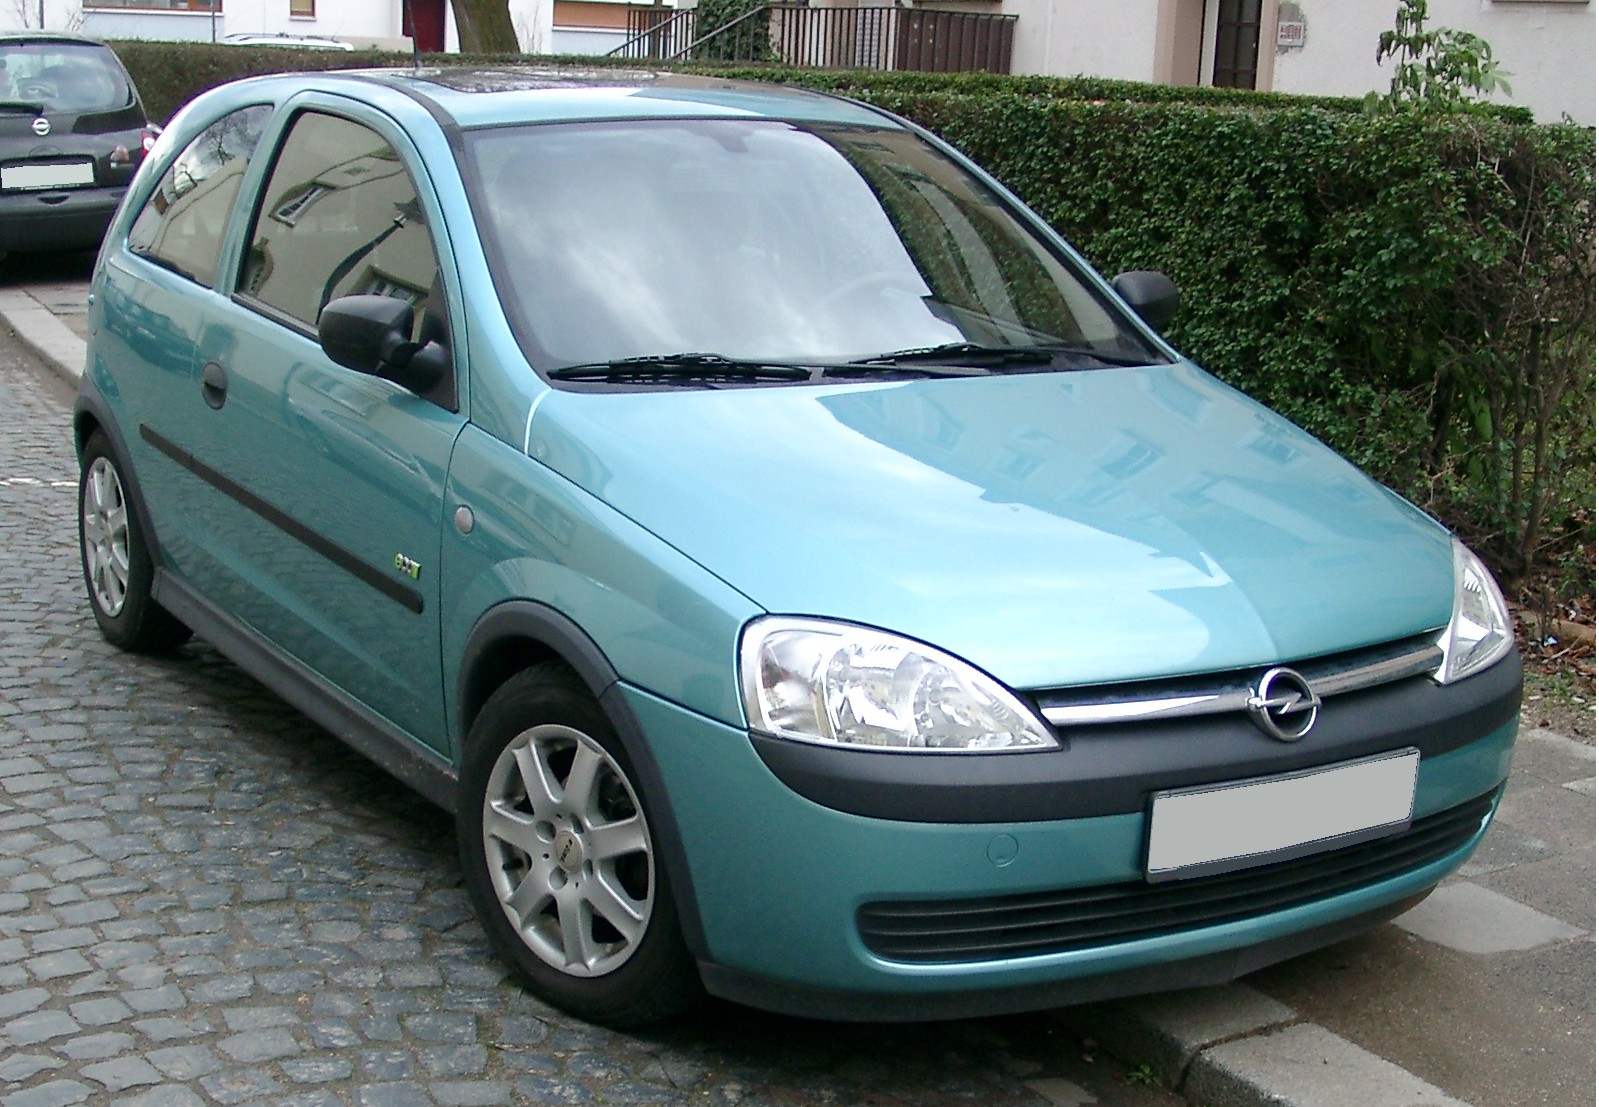 Opel corsa opc: 01 image